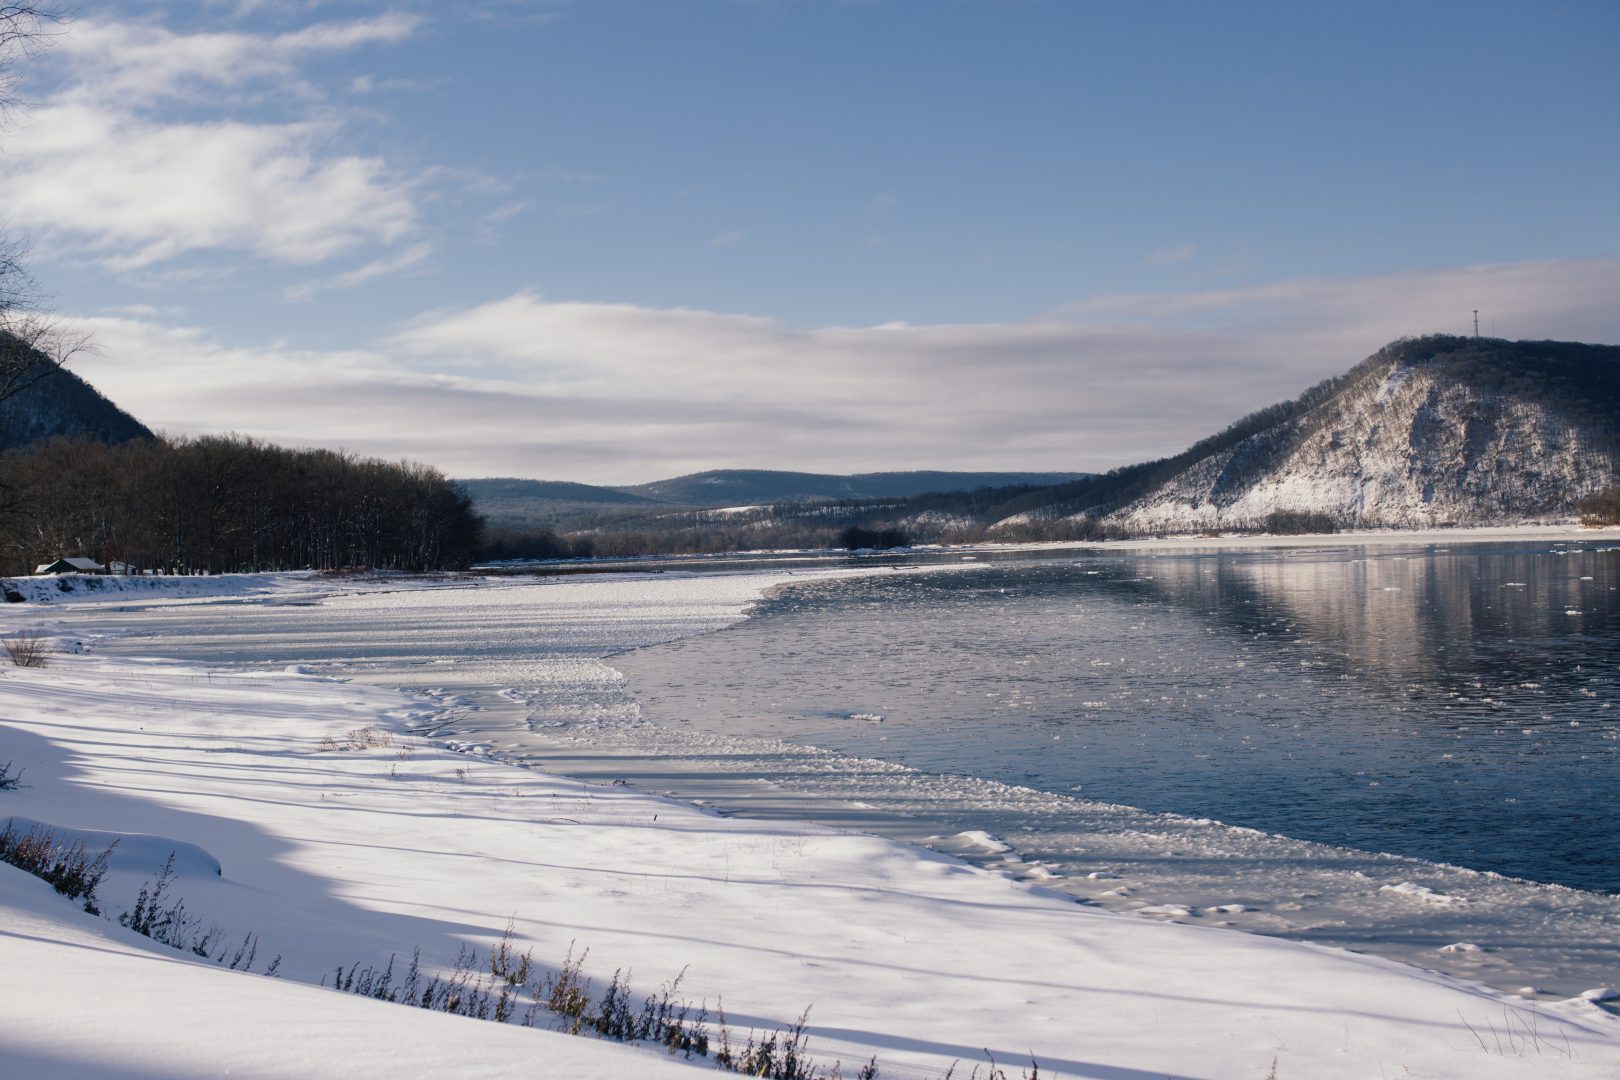 The Susquehanna River on December 17, 2020.